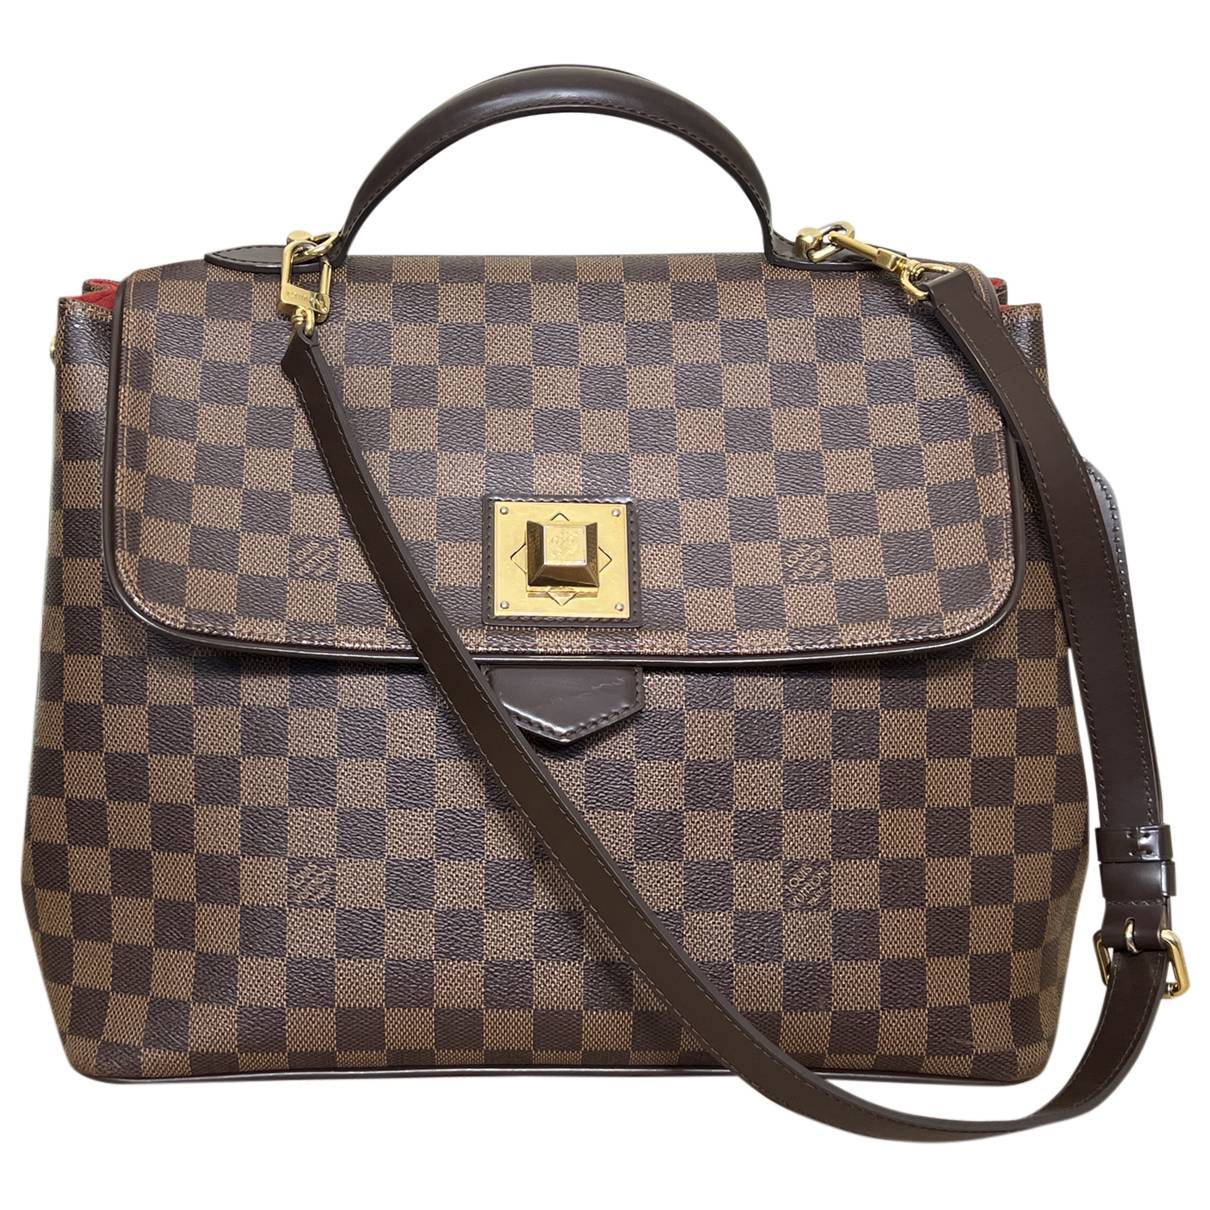 Bergamo leather handbag Louis Vuitton Brown in Leather - 28114426